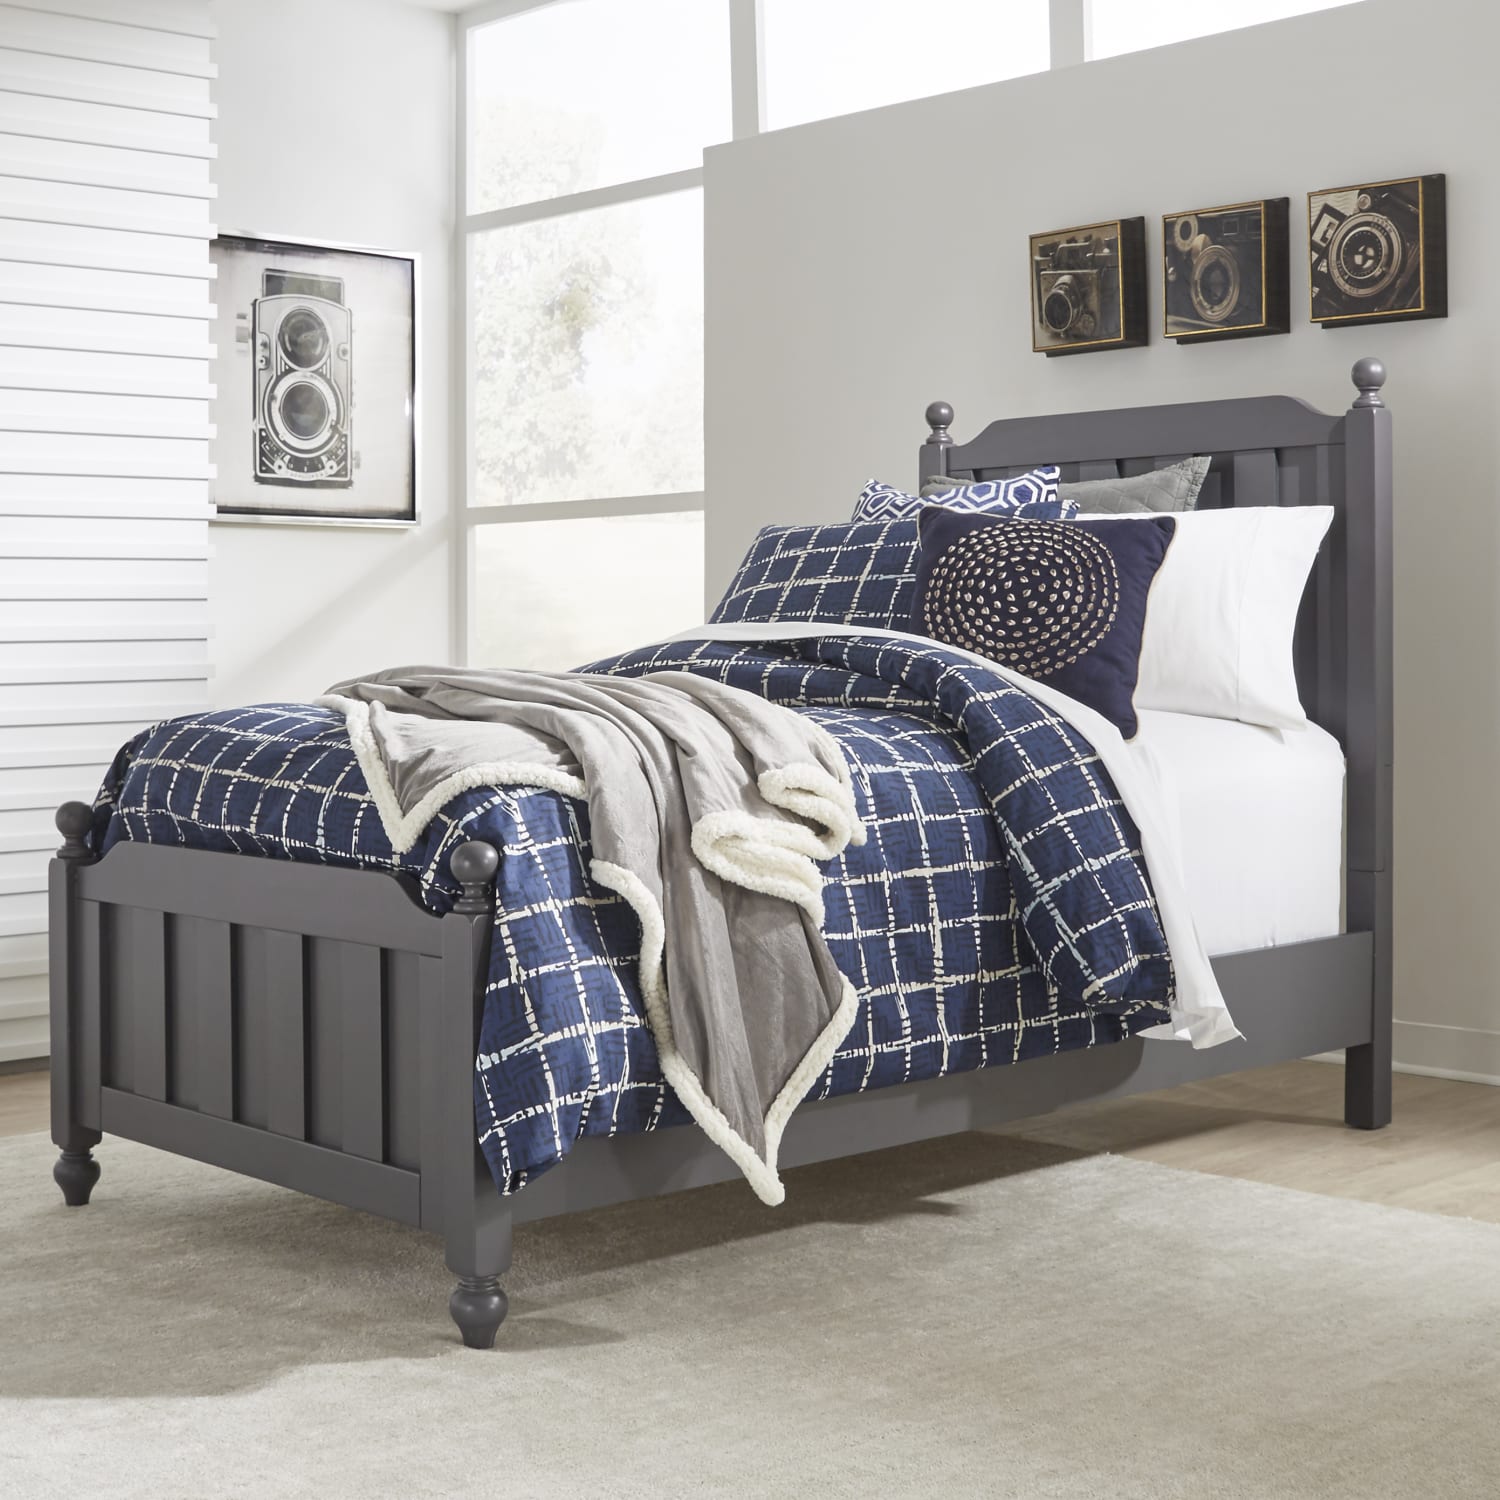 Sienna Gray Full Bed